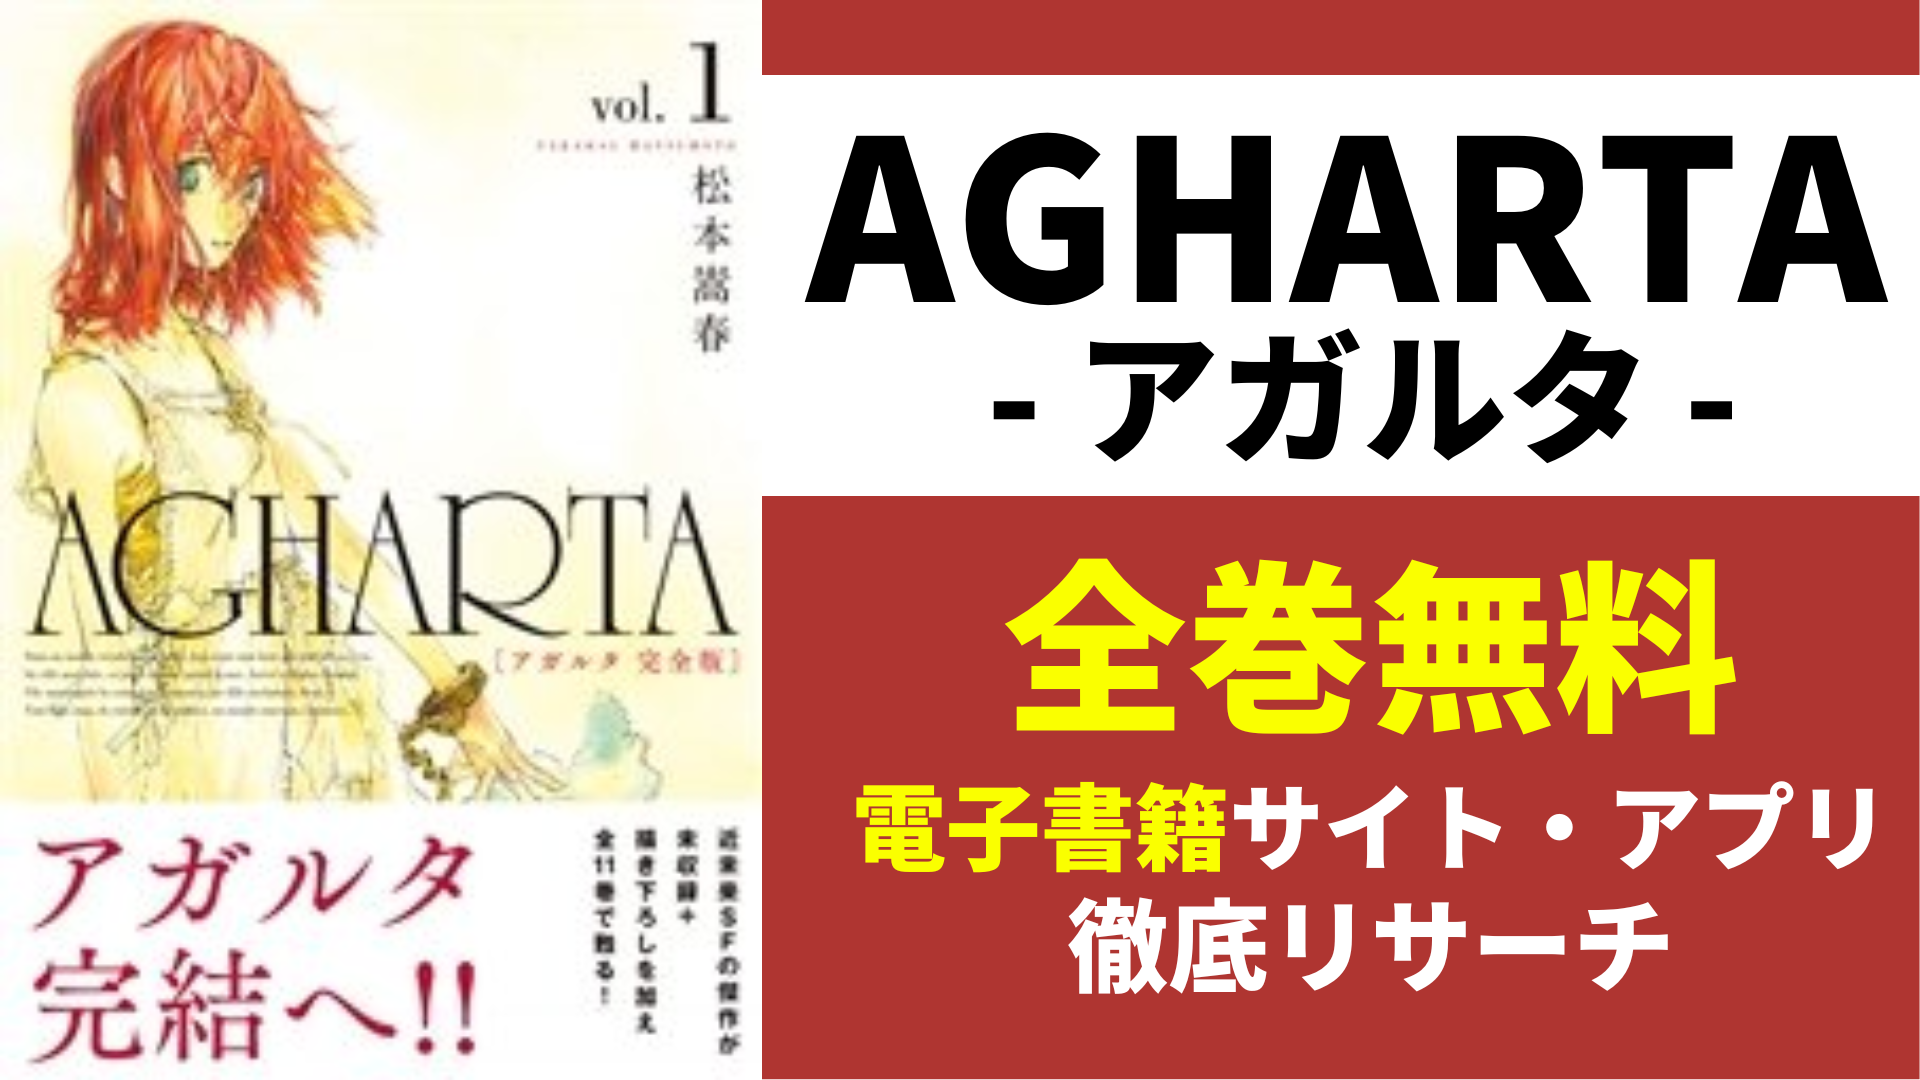 AGHARTA - アガルタ -を全巻無料で読むサイトを紹介